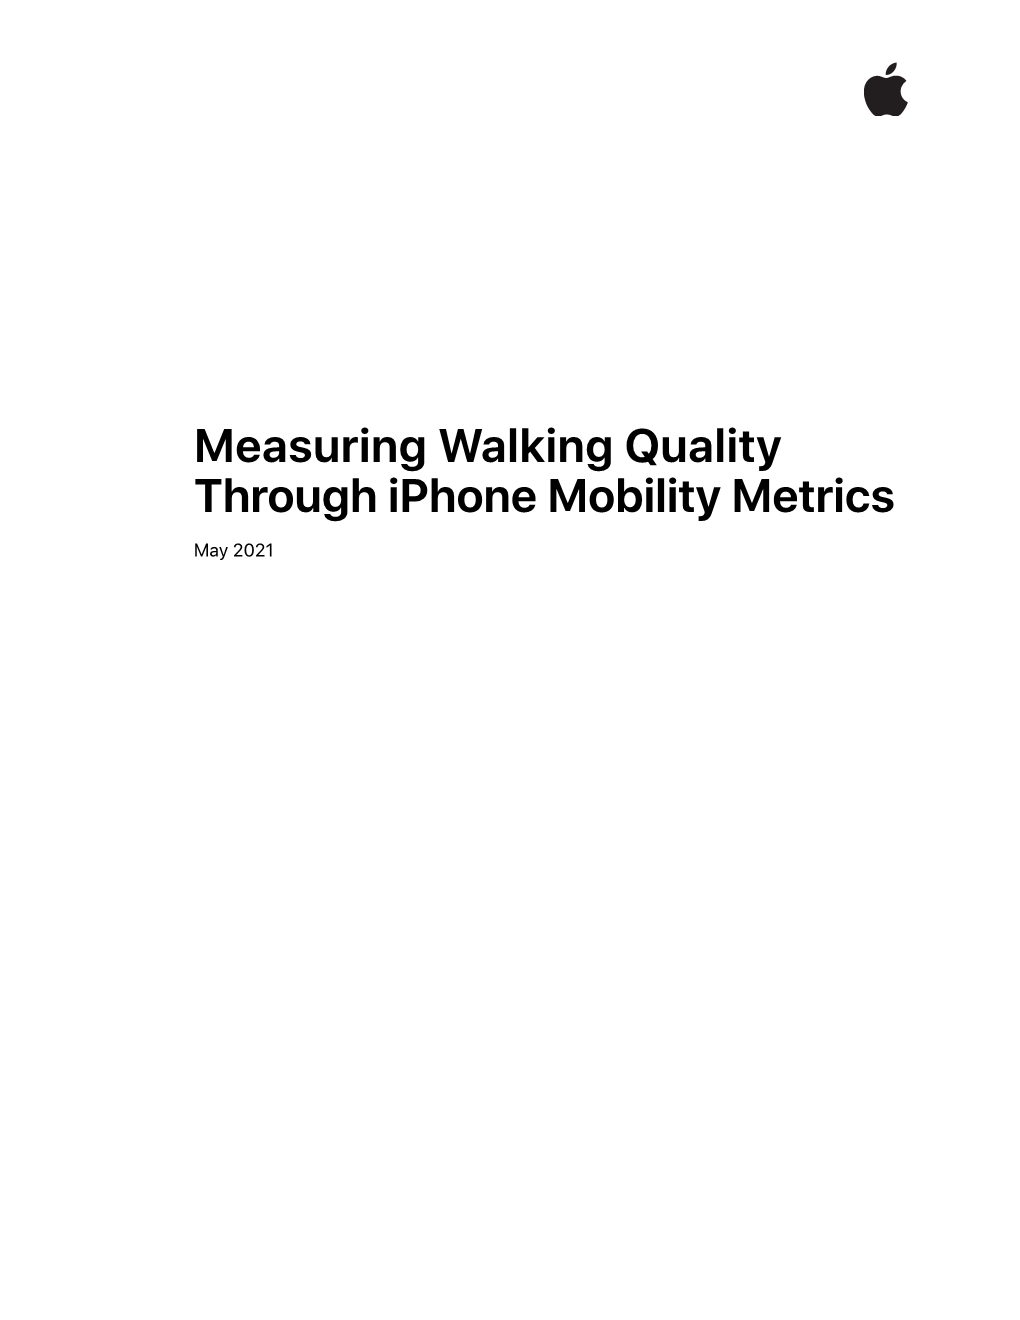 Measuring Walking Quality Through Iphone Mobility Metrics